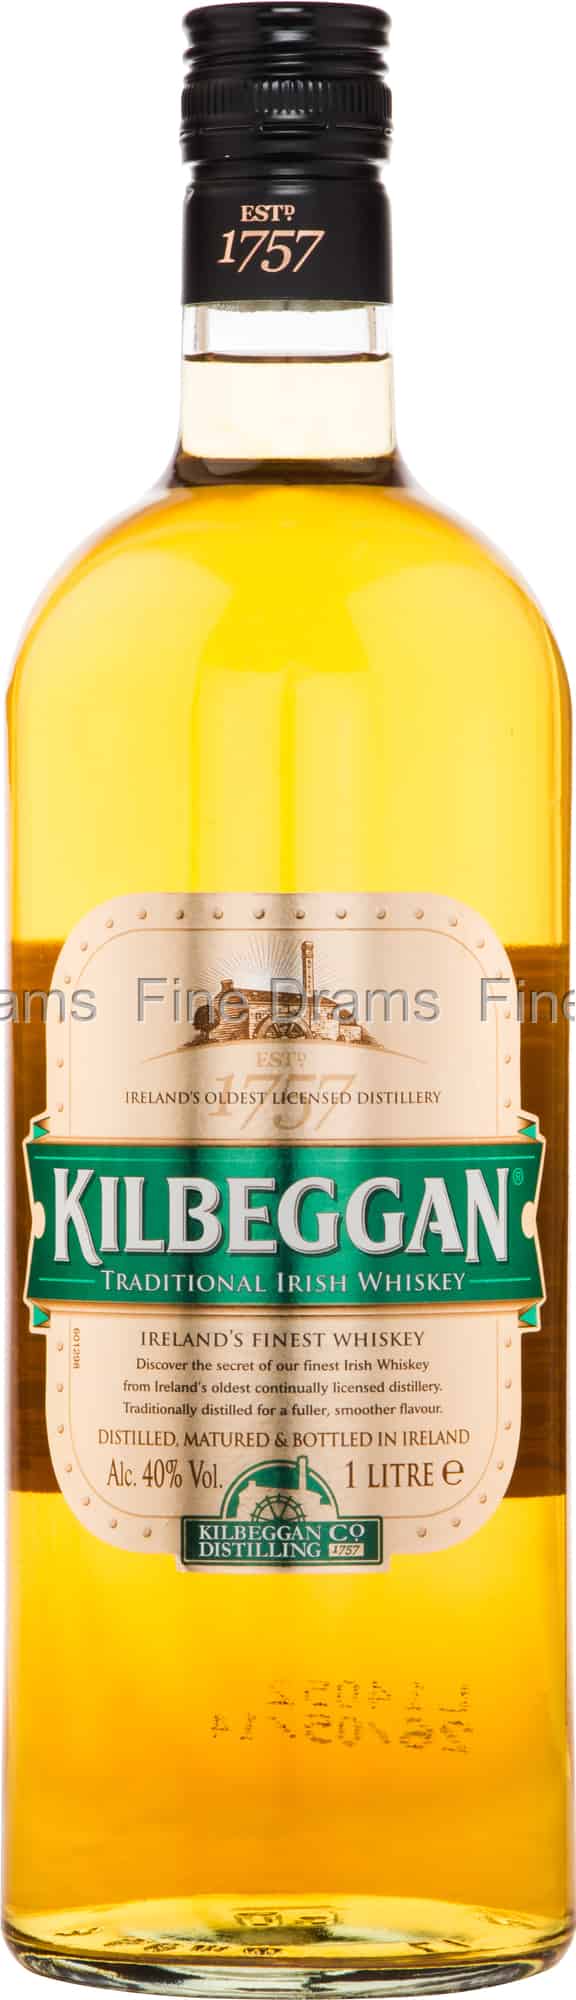 Kilbeggan Irish Whiskey (1 Liter)